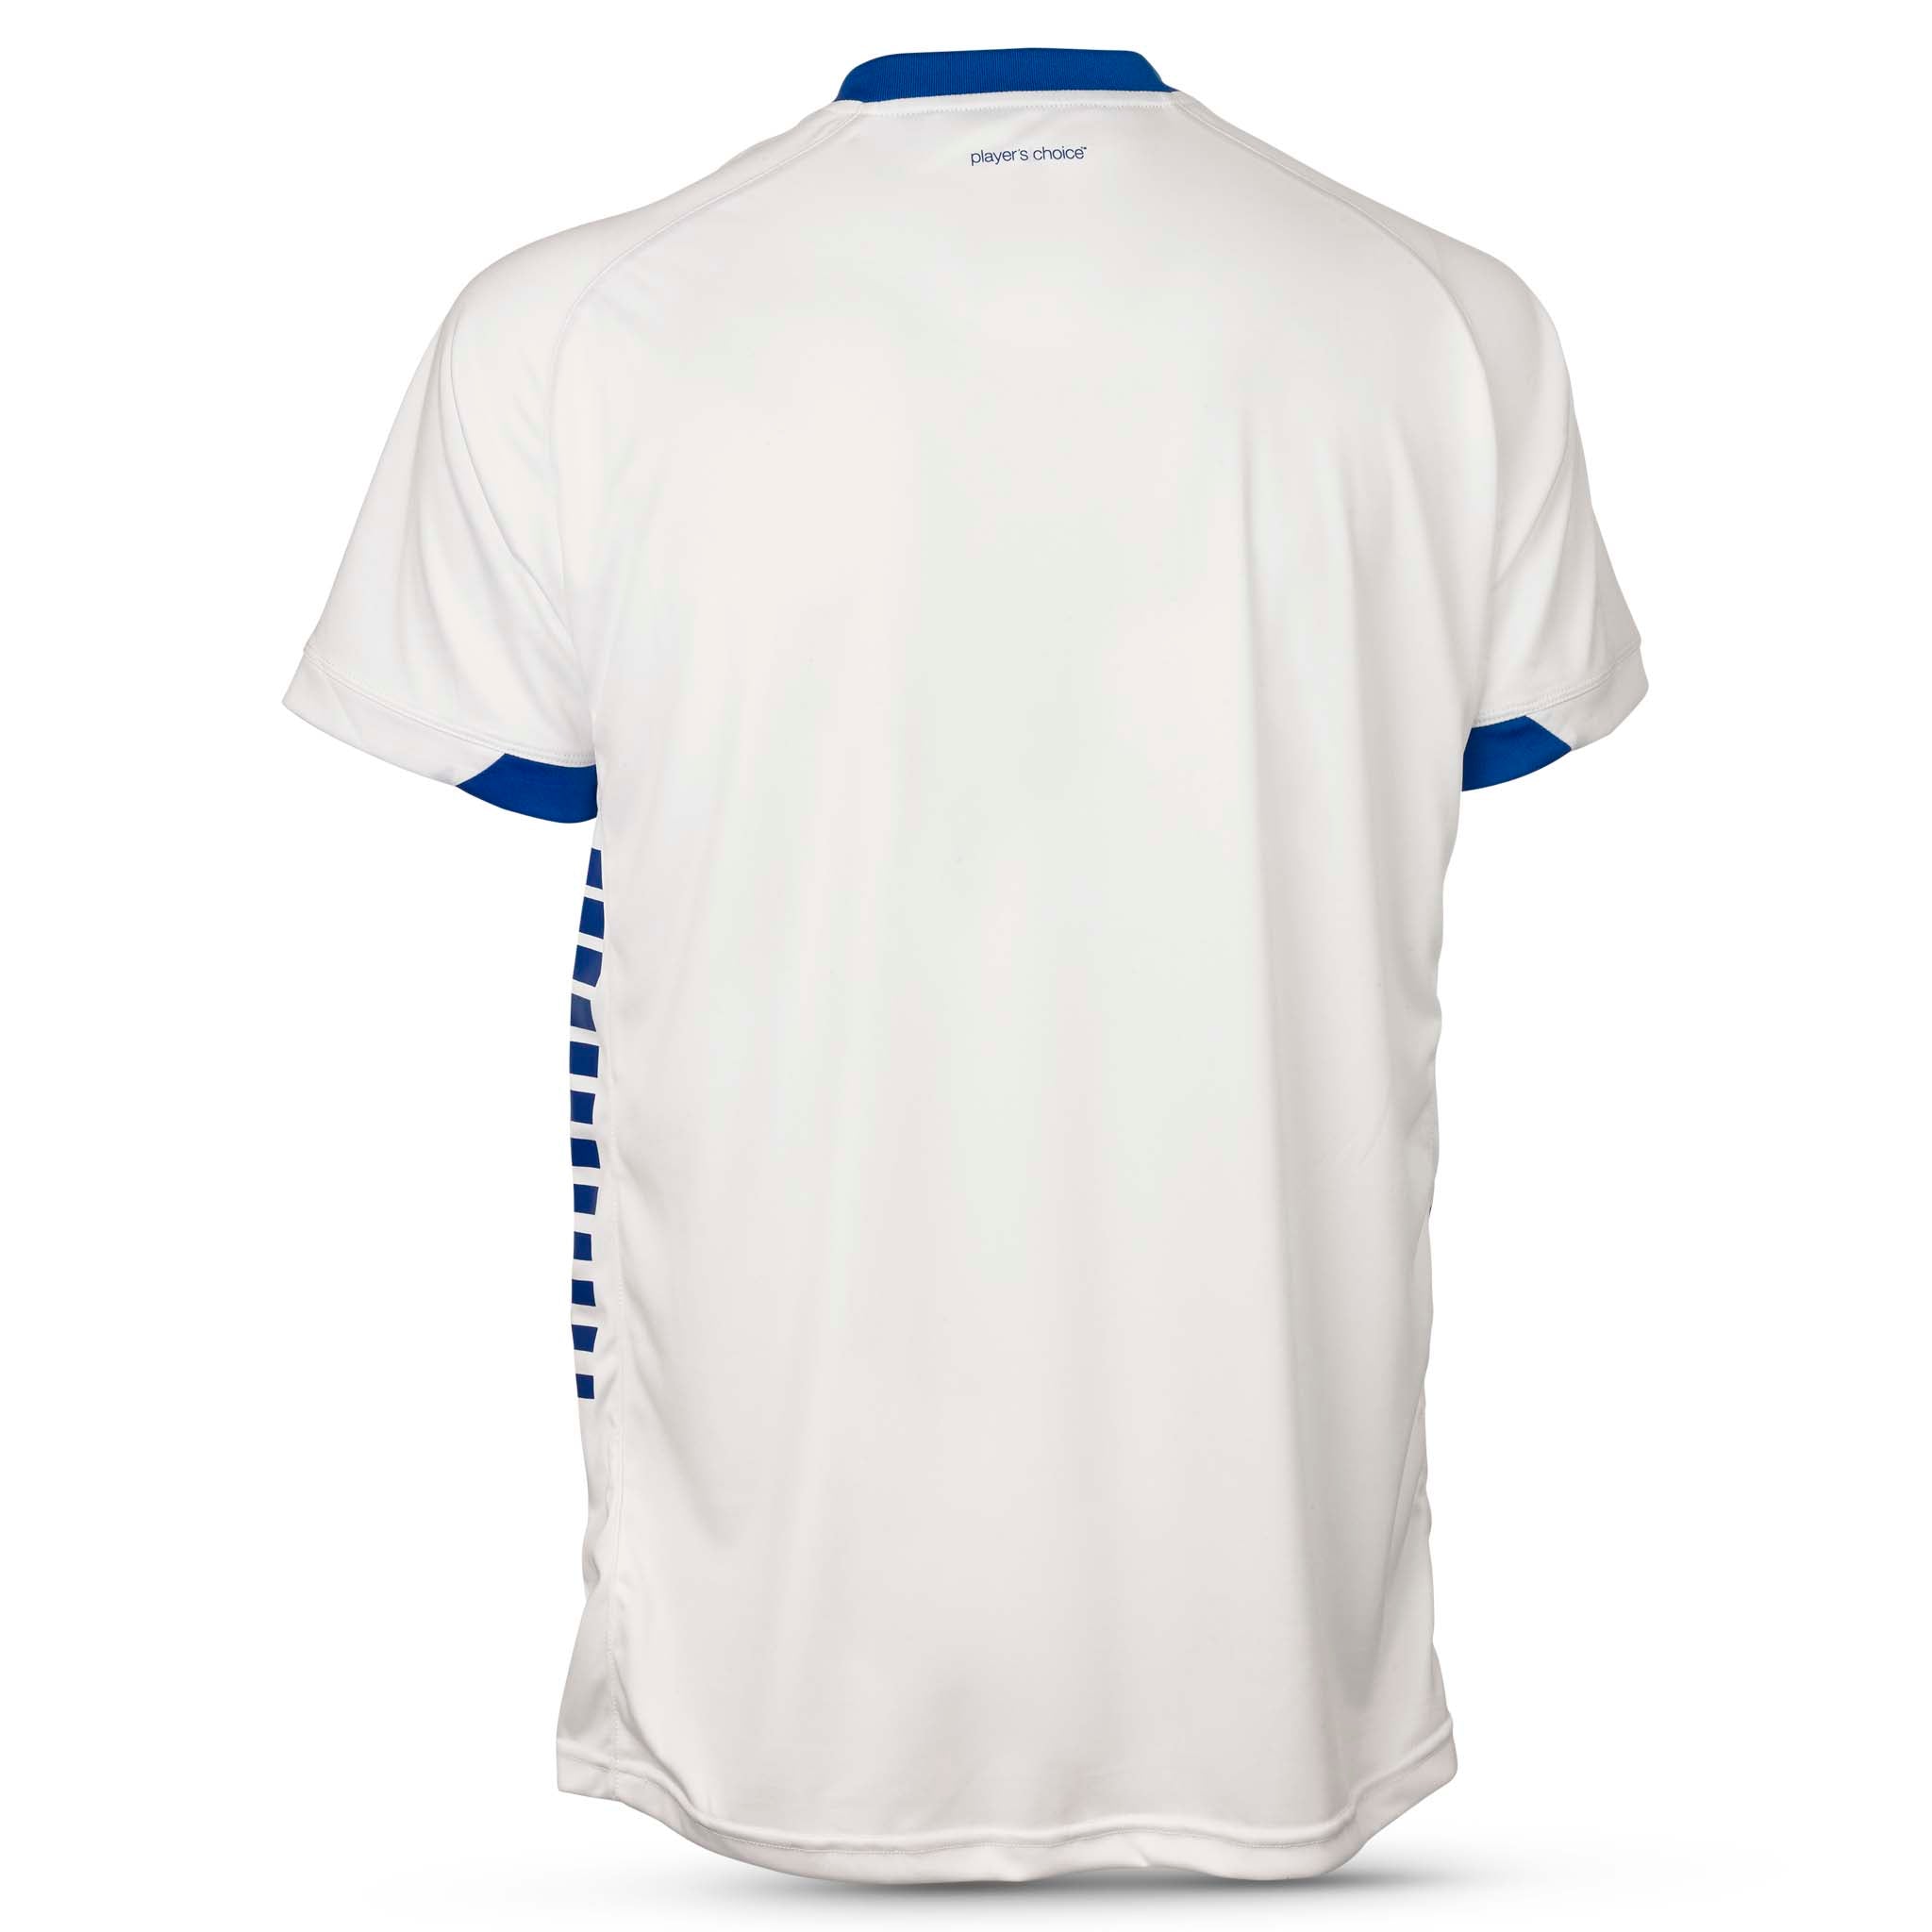 Spain Short Sleeve player shirt #colour_white/blue #colour_white/blue